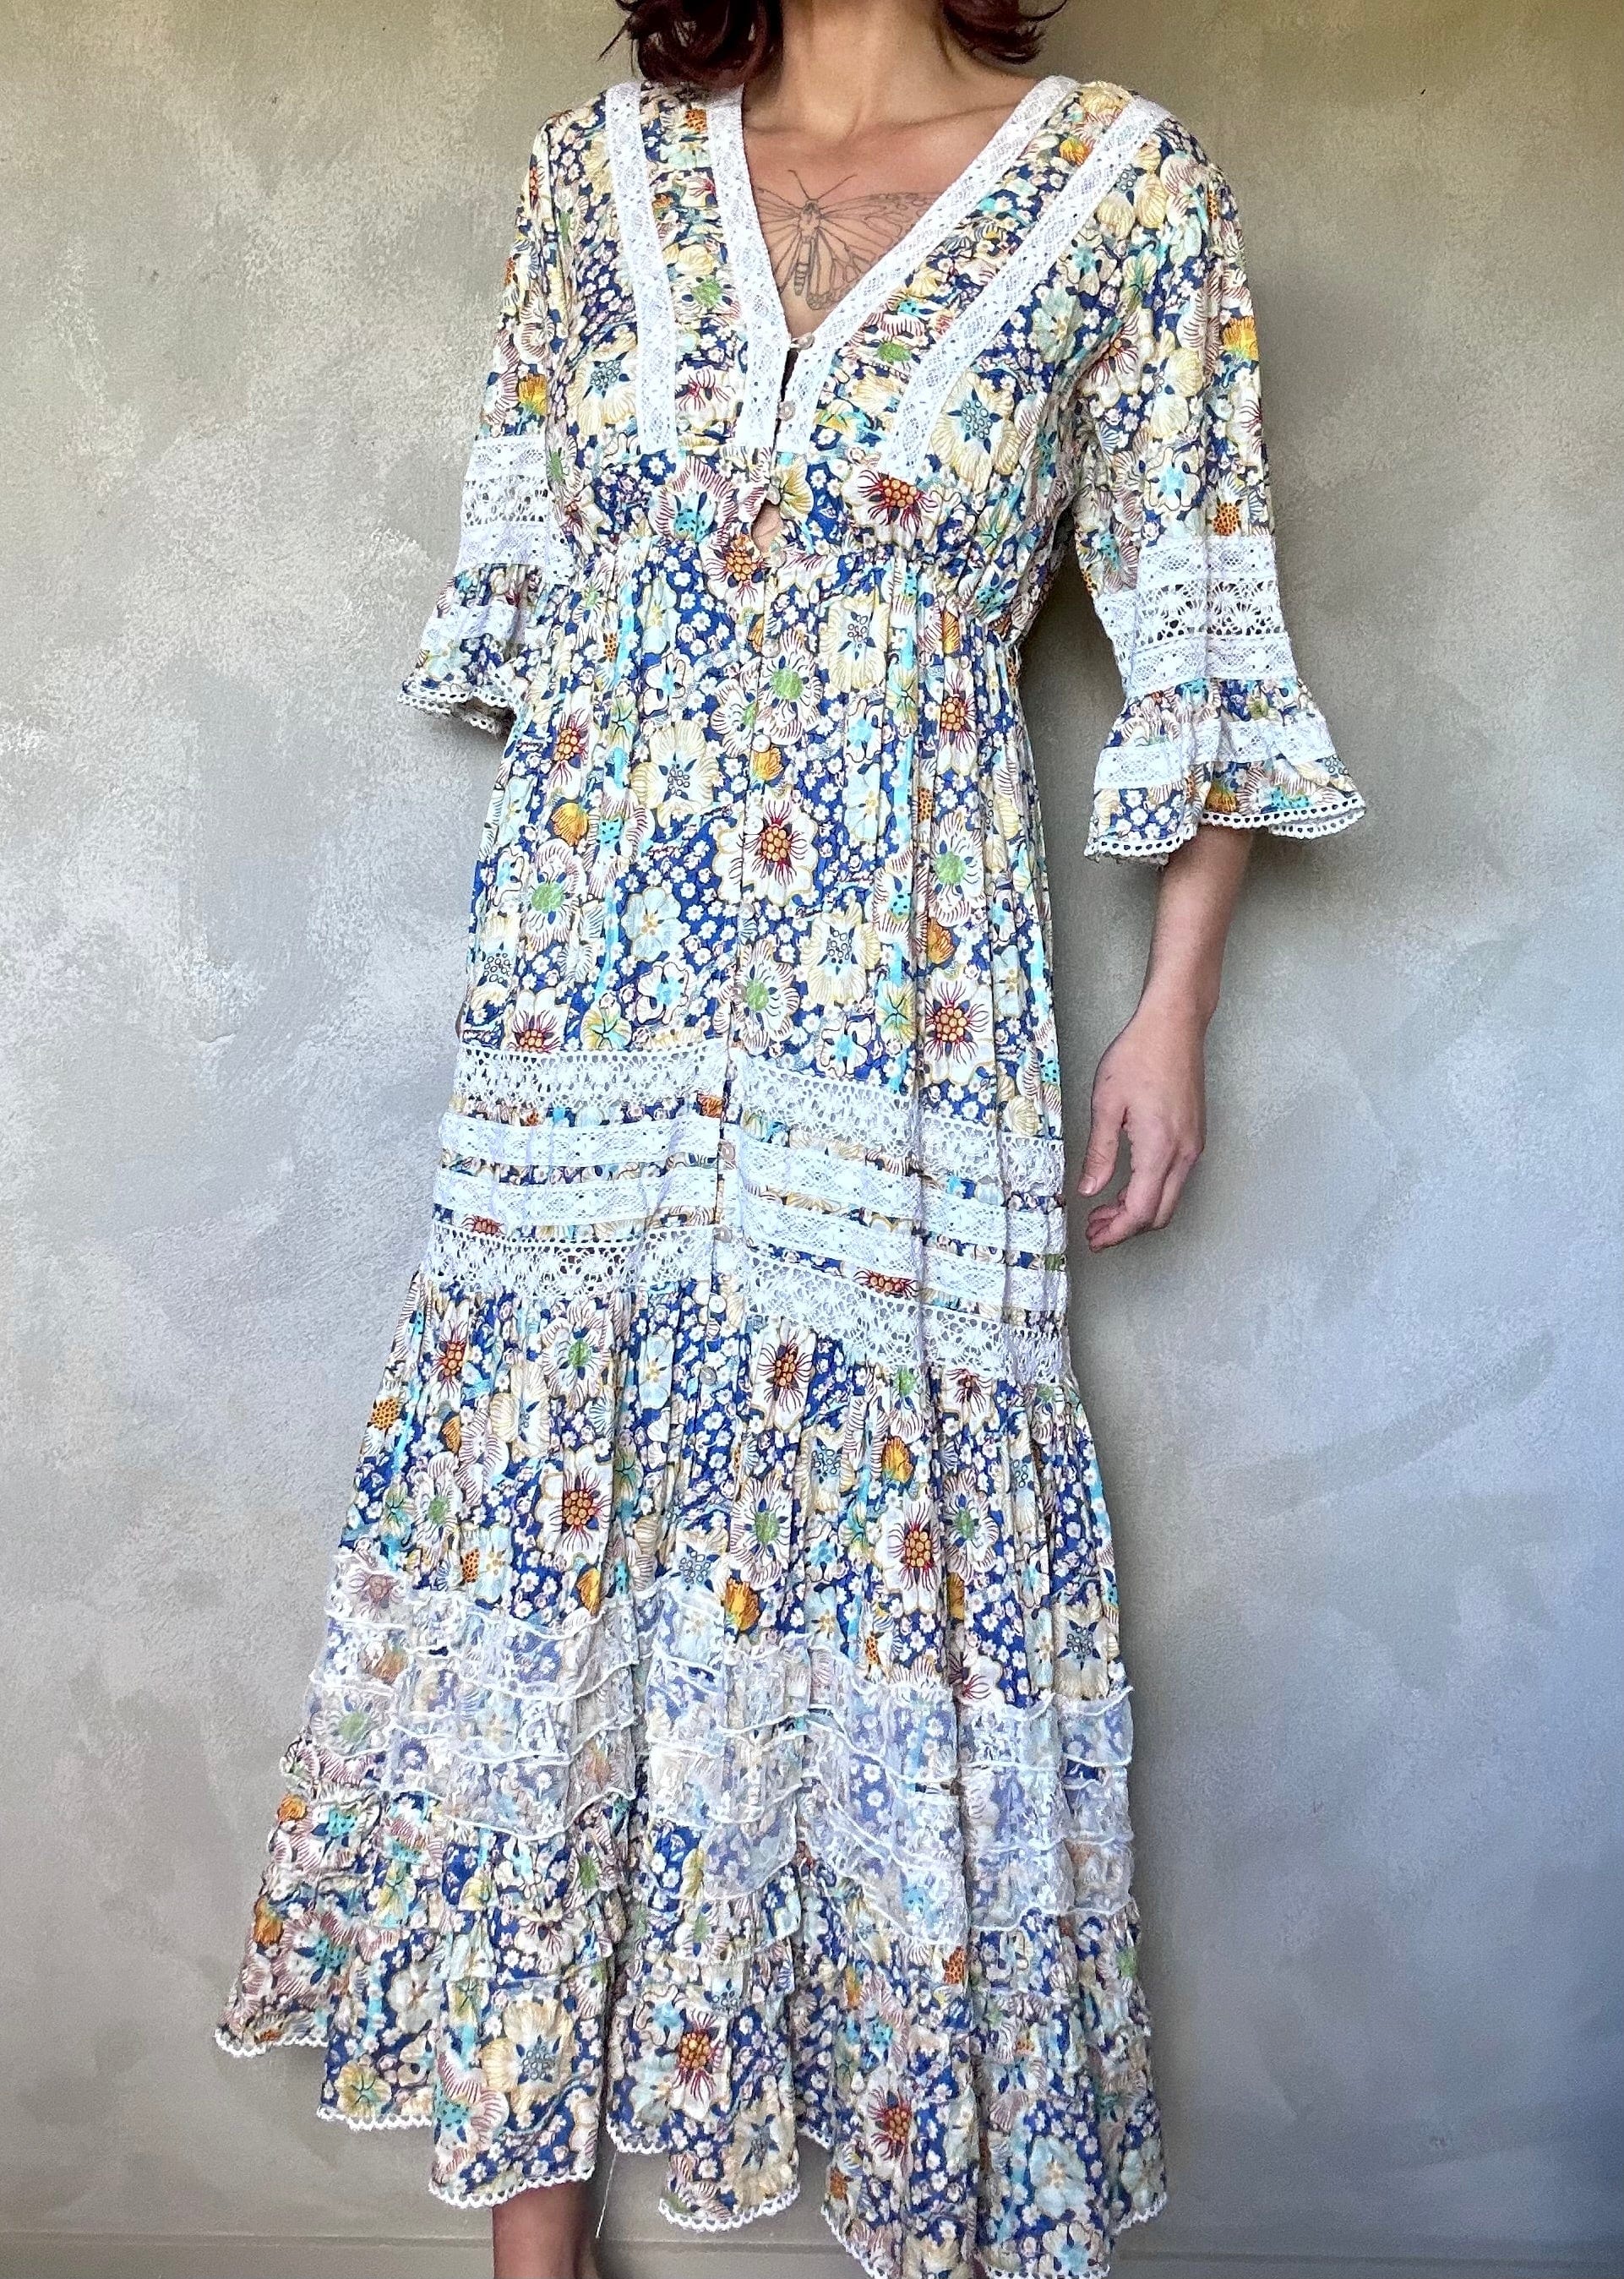 Sistergolden Sea Garden Sleeve Dress